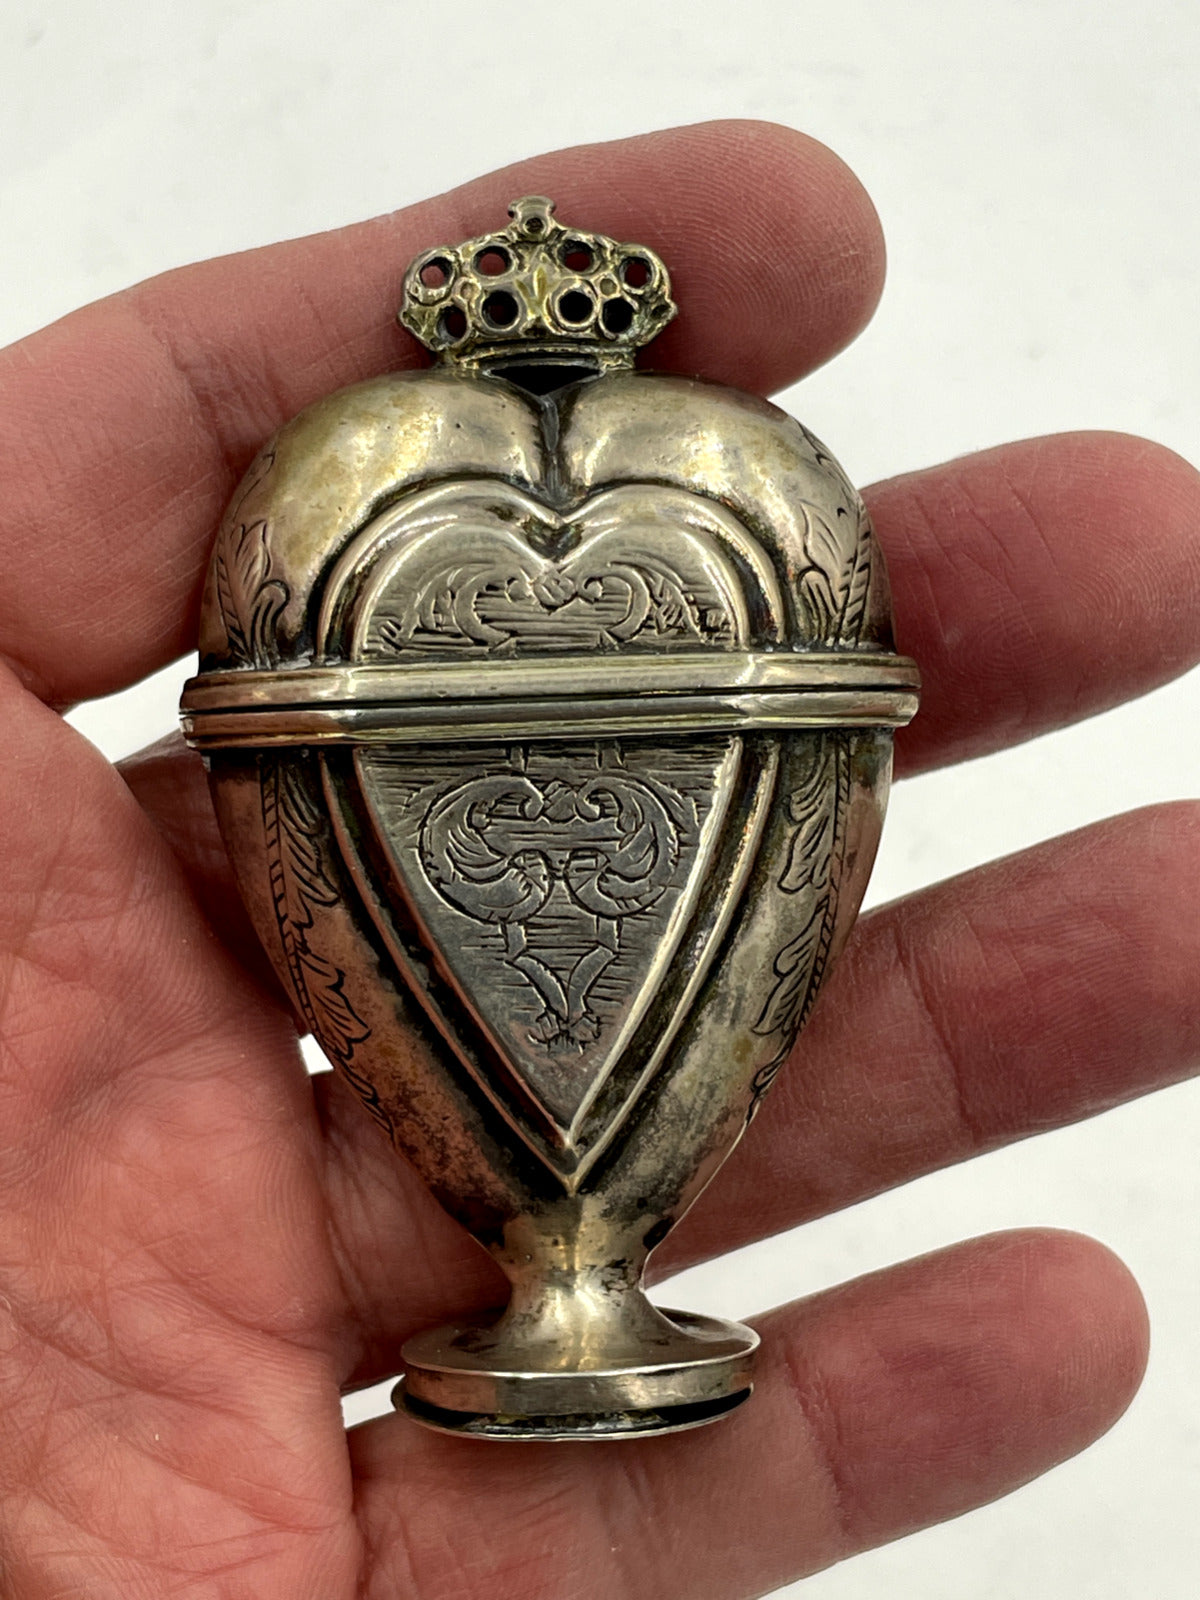 Scandinavian Solid Silver and Gilded Heart-Shaped Vinaigrette or Hovedvandsaeg